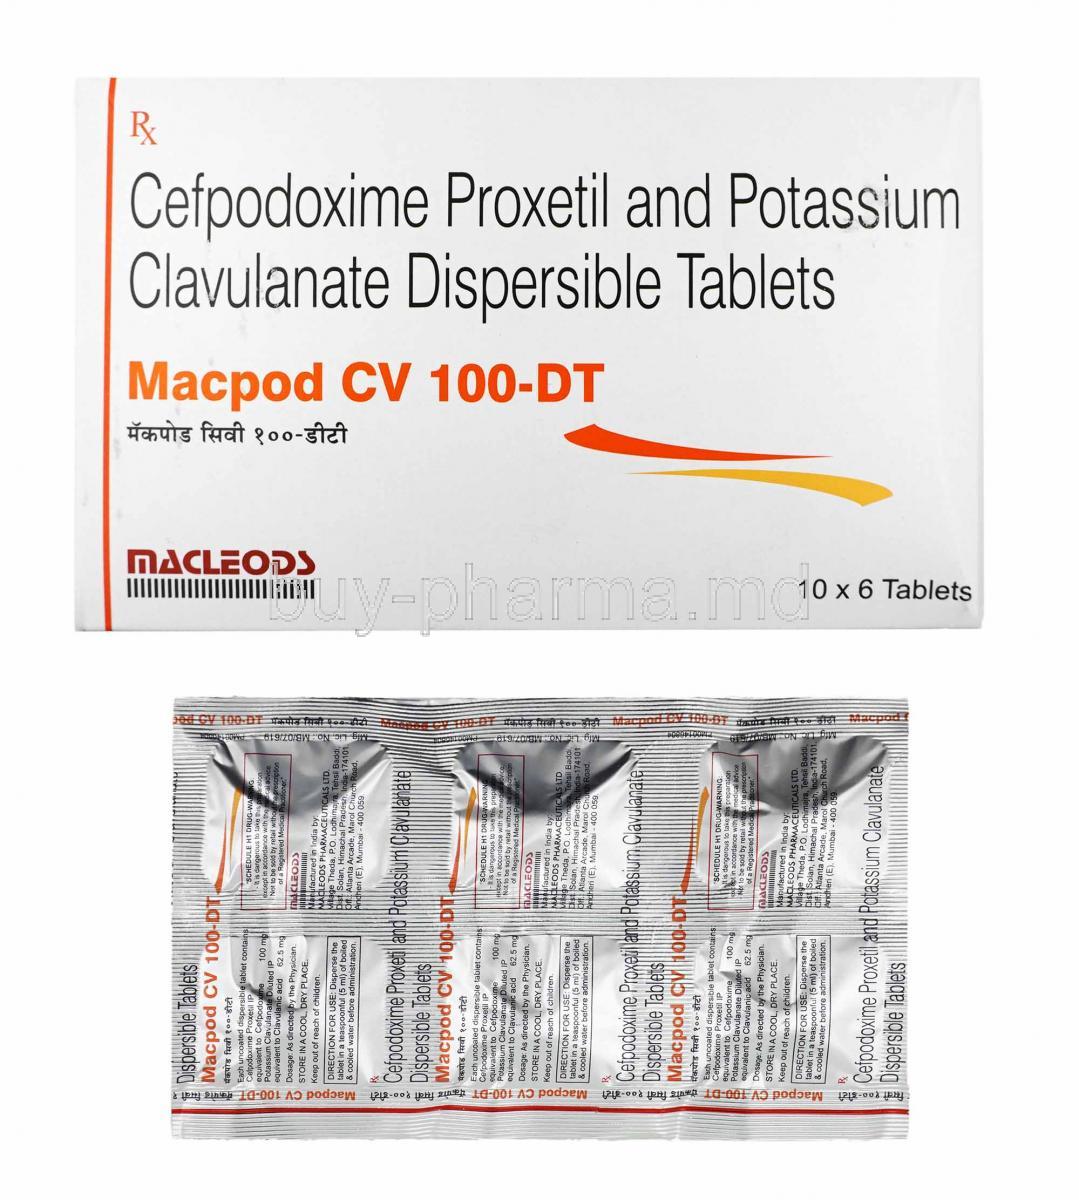 Macpod CV, Cefpodoxime and Clavulanic Acid 100mg box and tablets